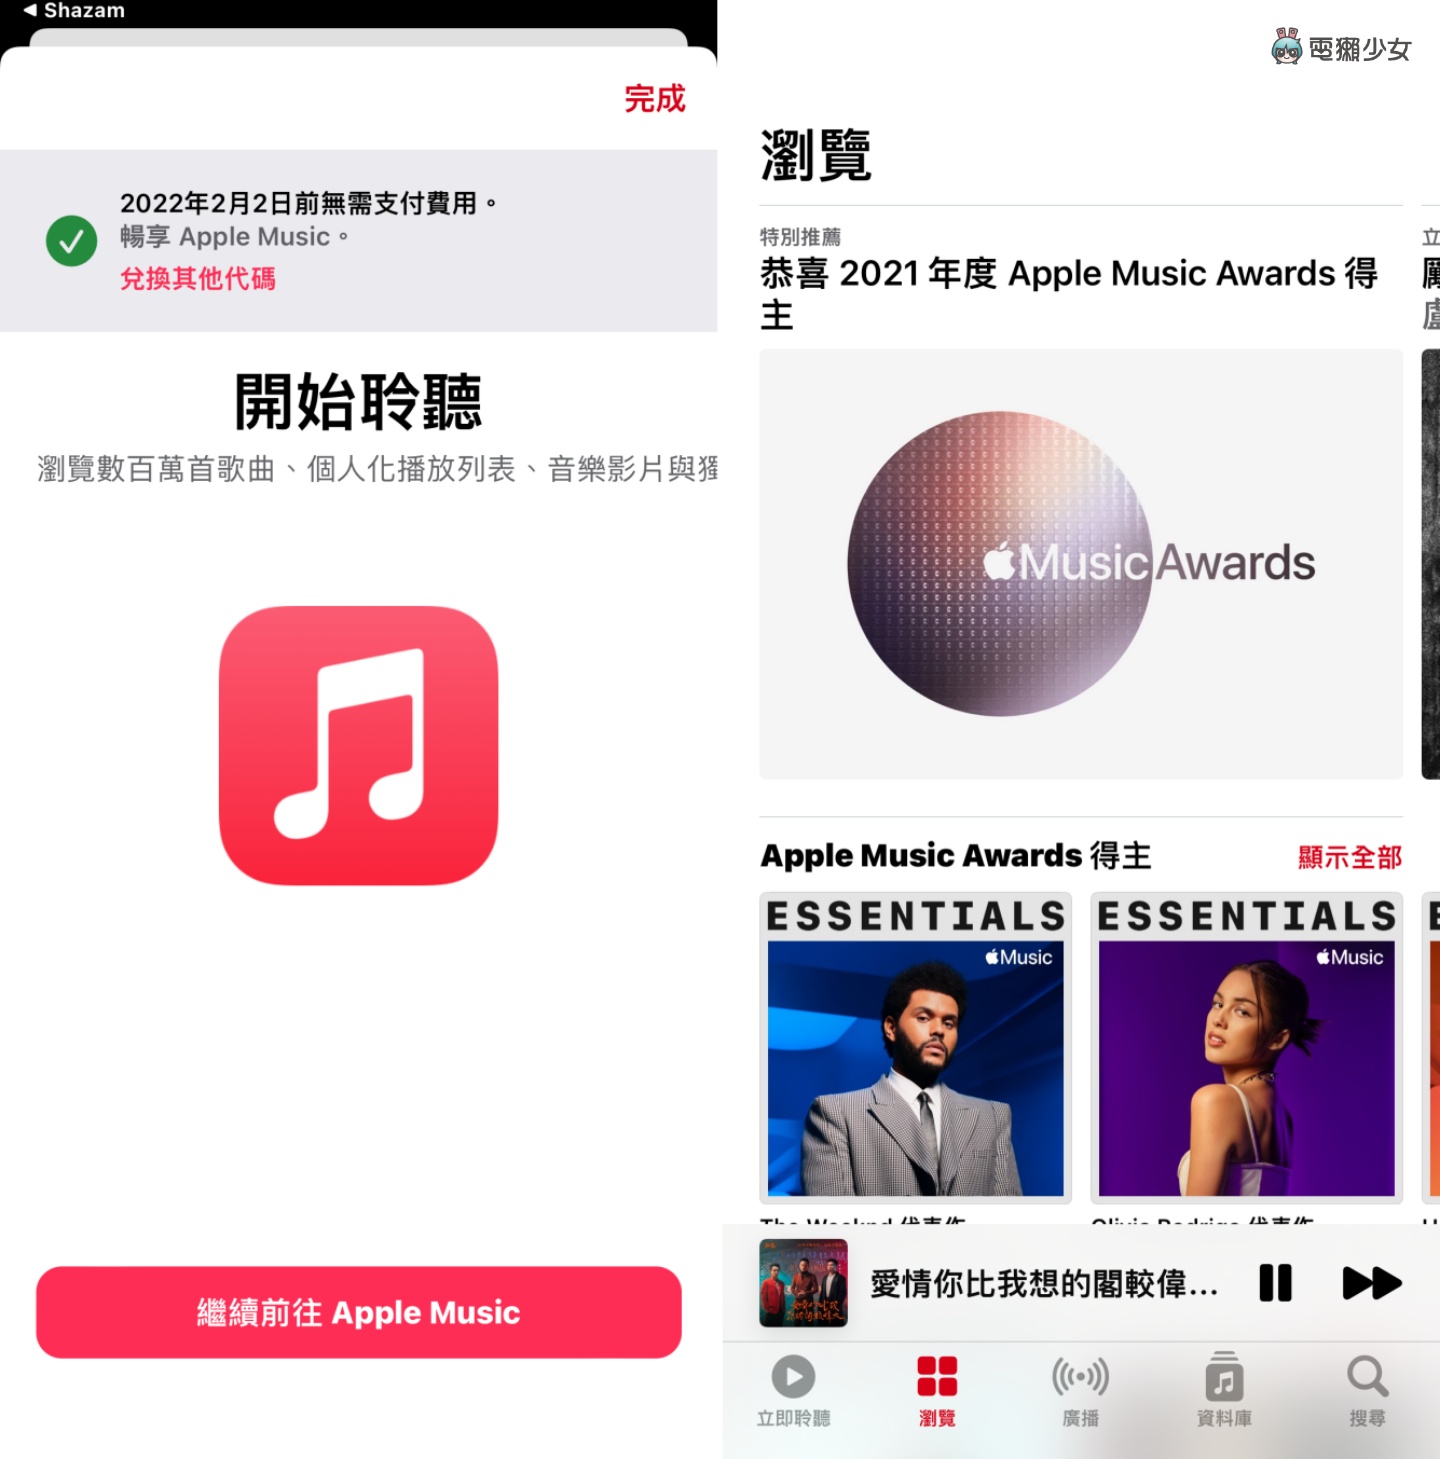 Apple Music 免費試用！用 Shazam 就能直接兌換！新用戶可享免費體驗 5 個月